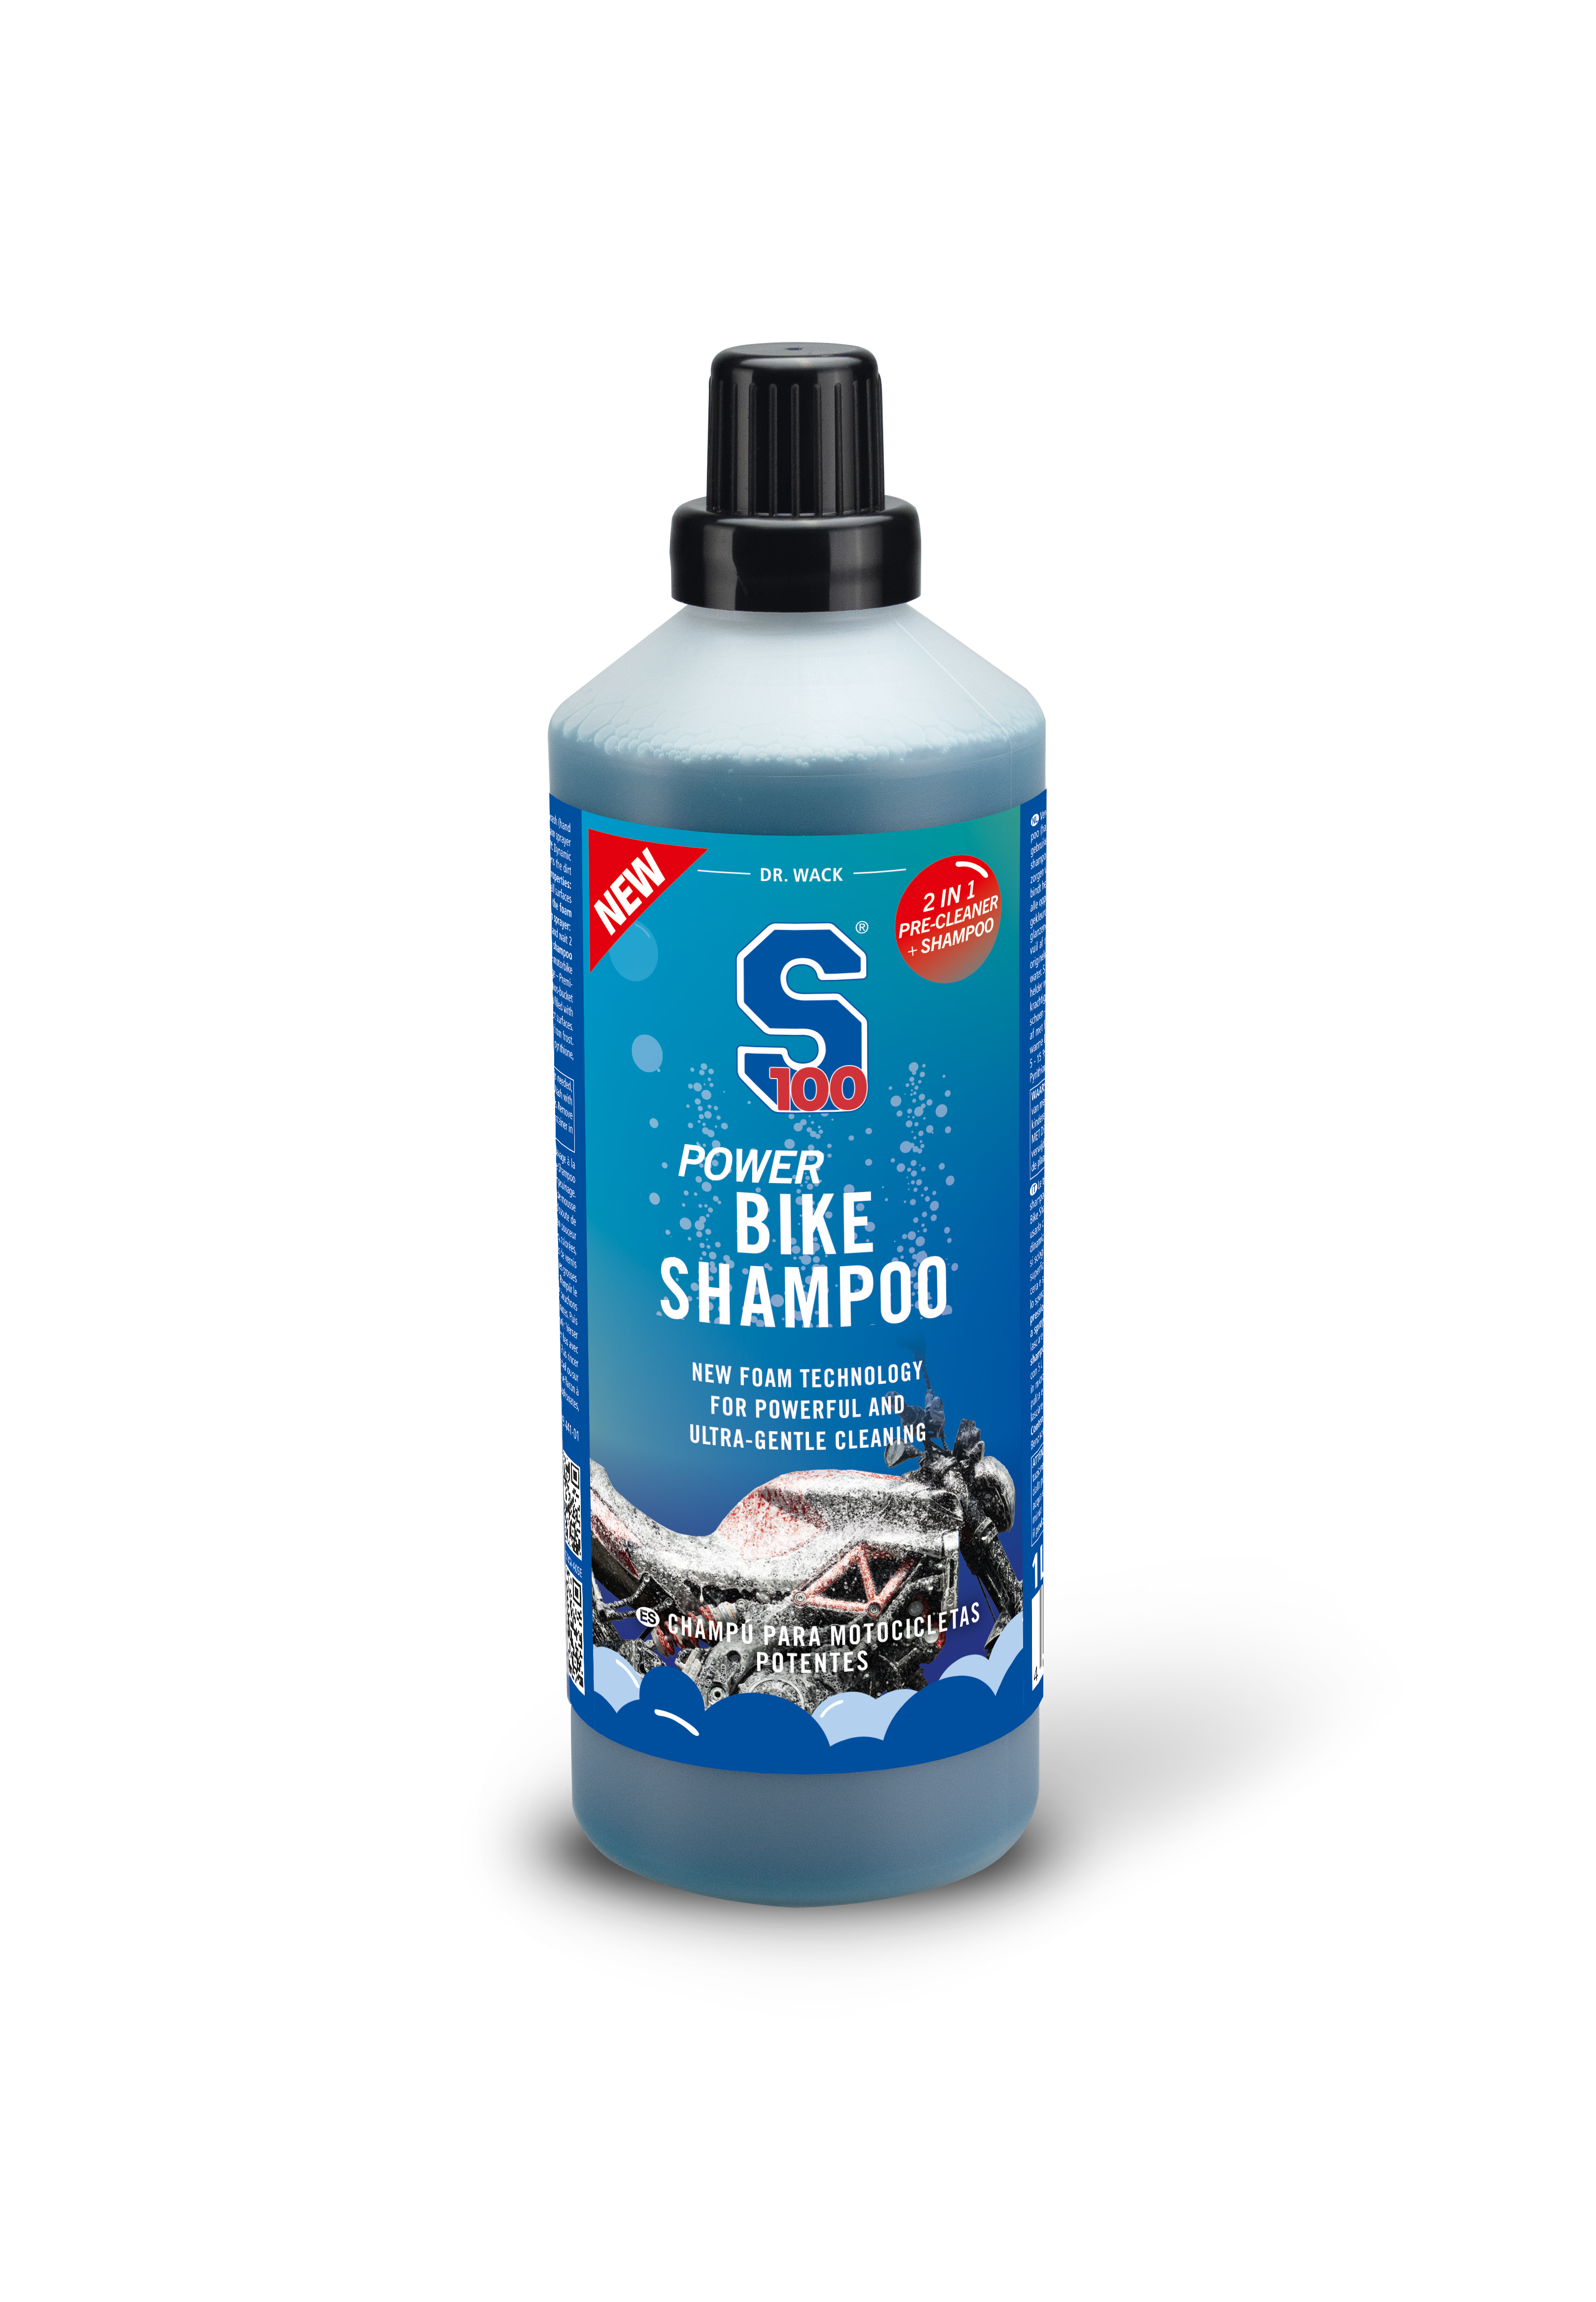 S100 Power Bike Shampoo